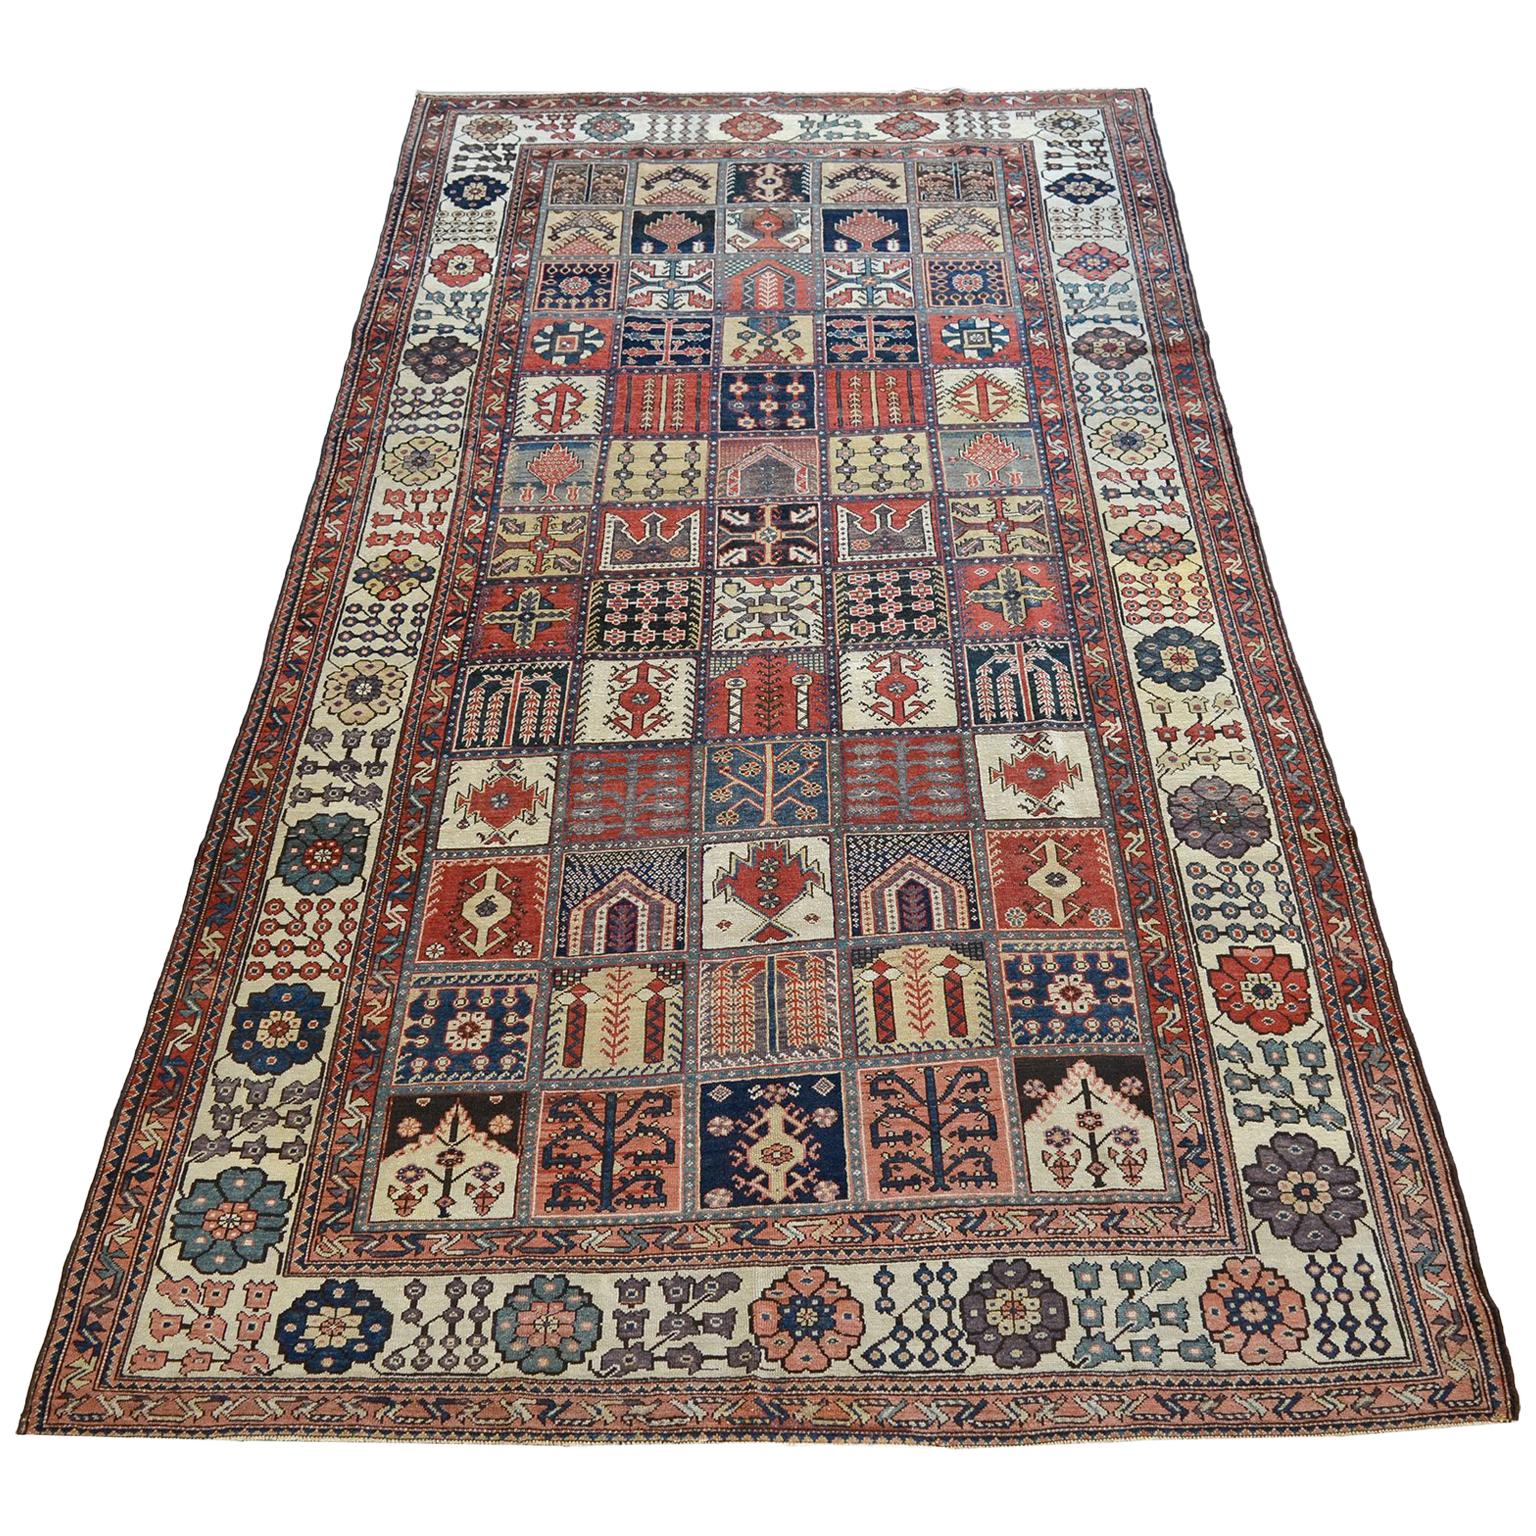 Antique 1900s Wool Persian Bakhtiari Rug by Olad, Garden Motif, 7' x 13' For Sale